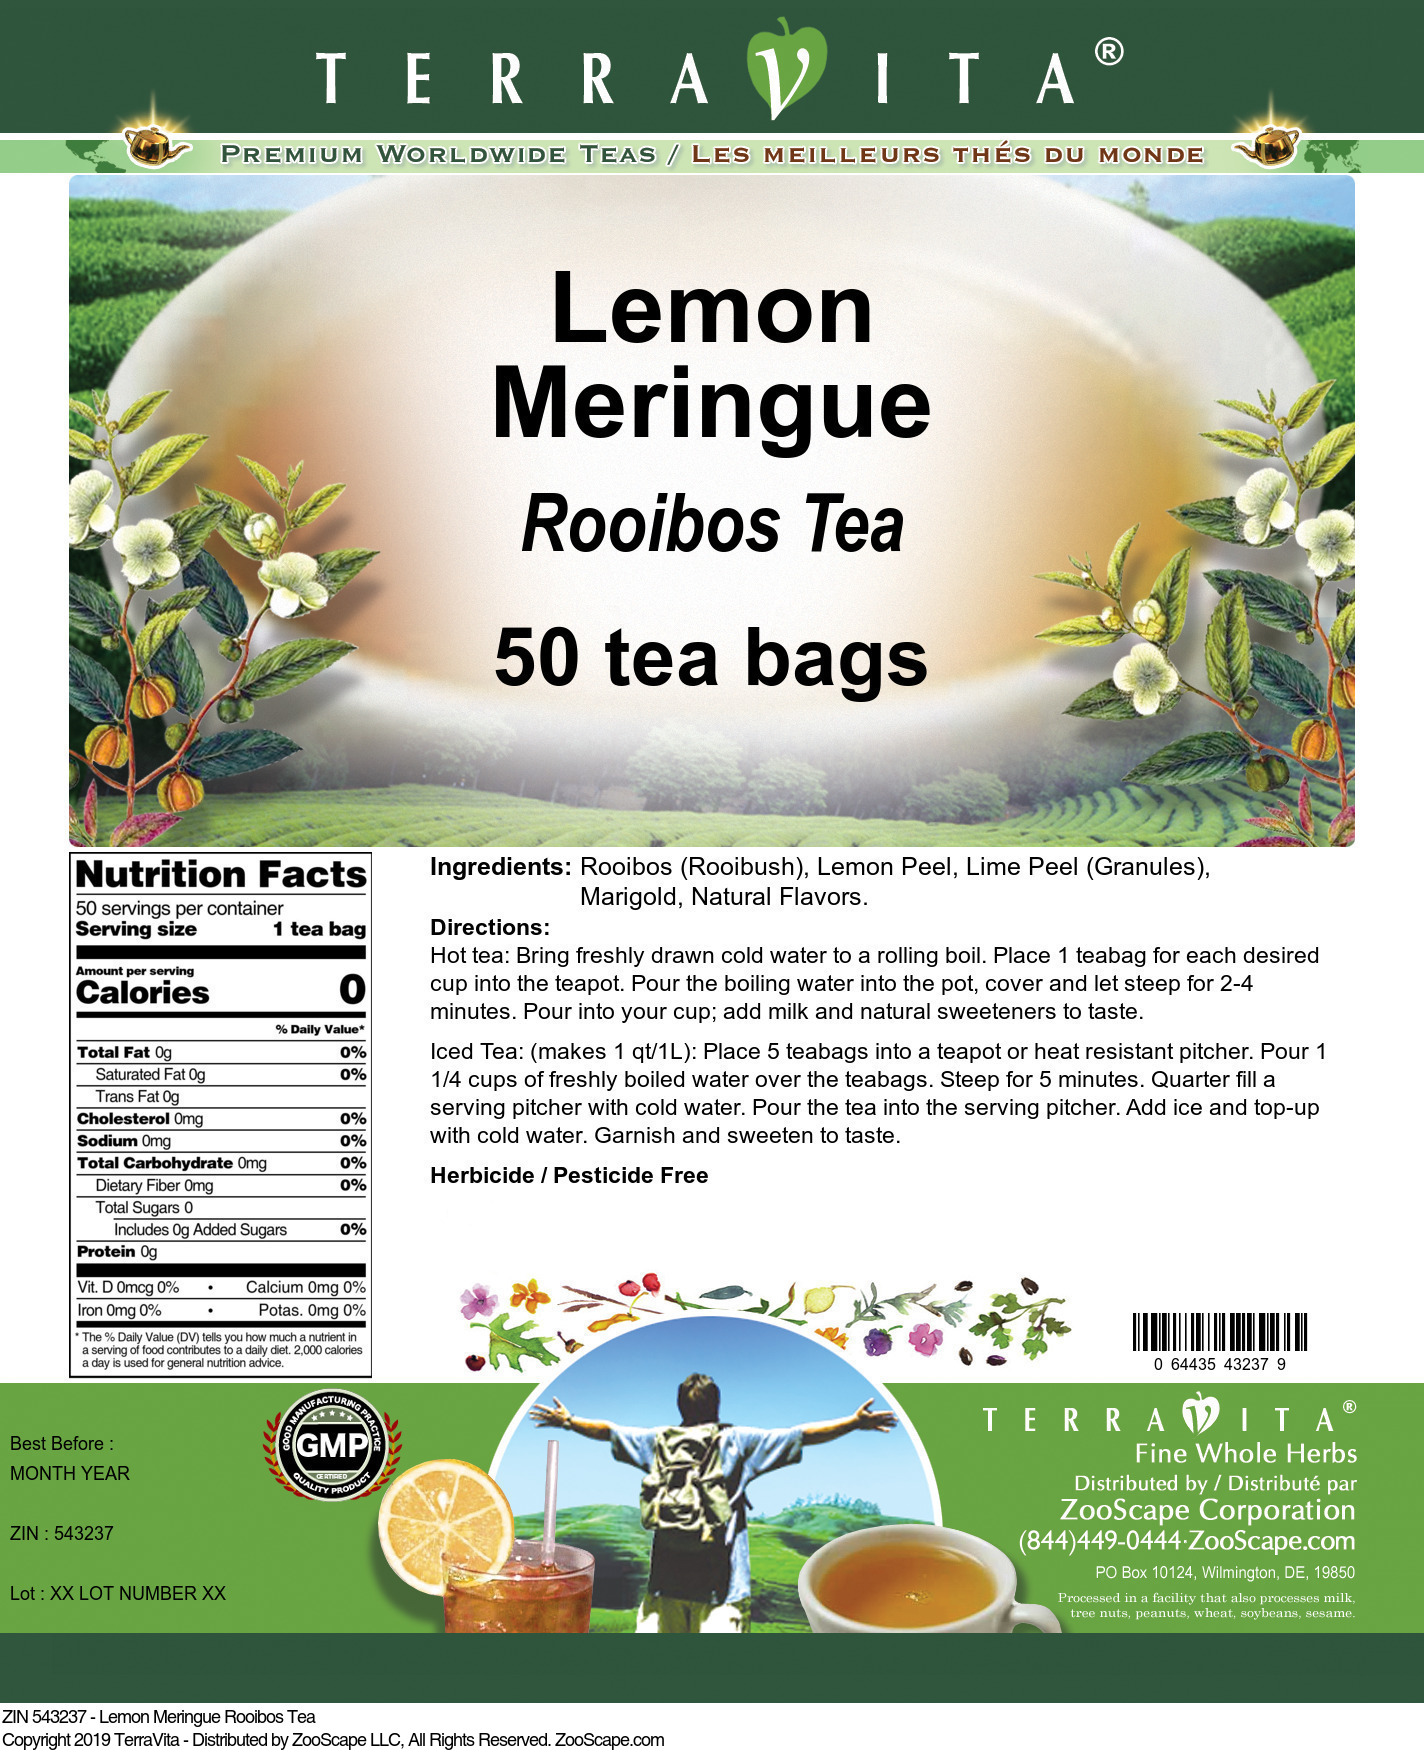 Lemon Meringue Rooibos Tea - Label